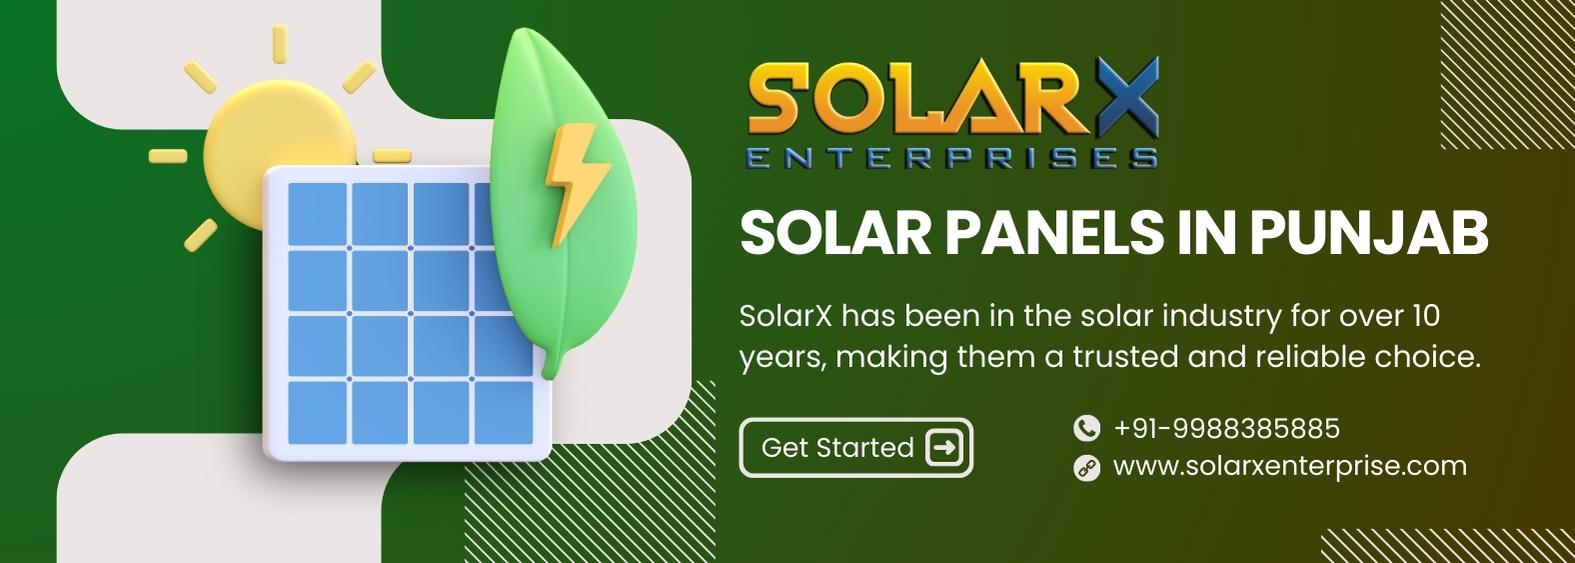 Solar panel in Punjab